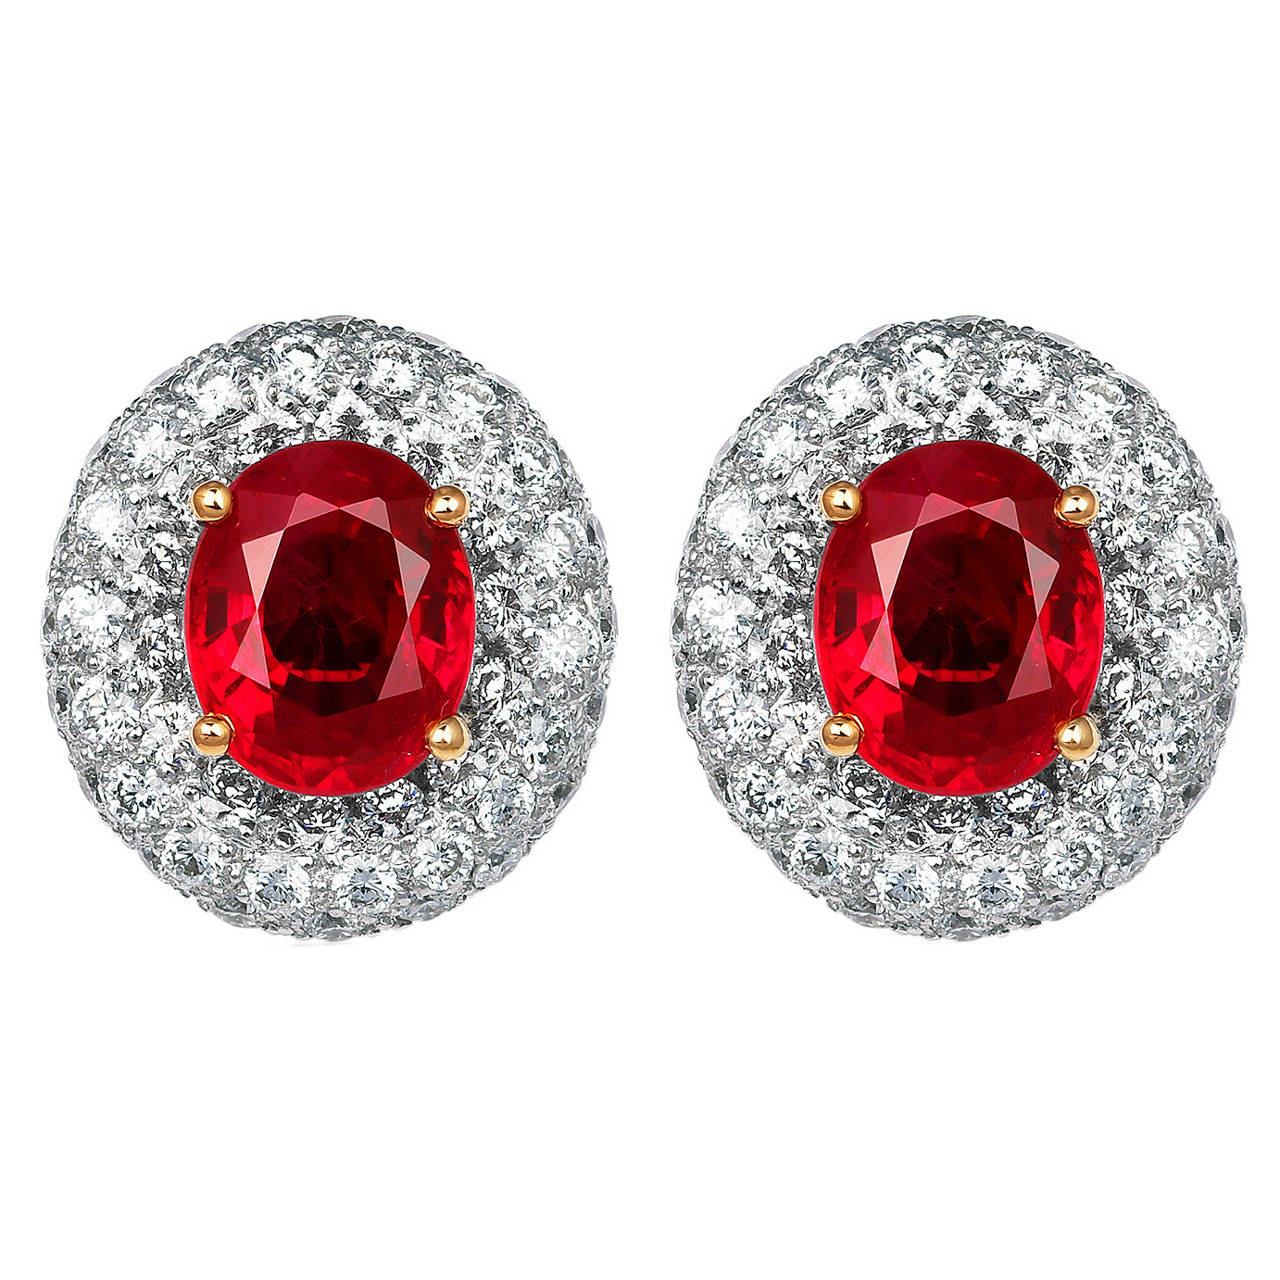 4.53 Carat Burma Ruby Cluster Earrings For Sale